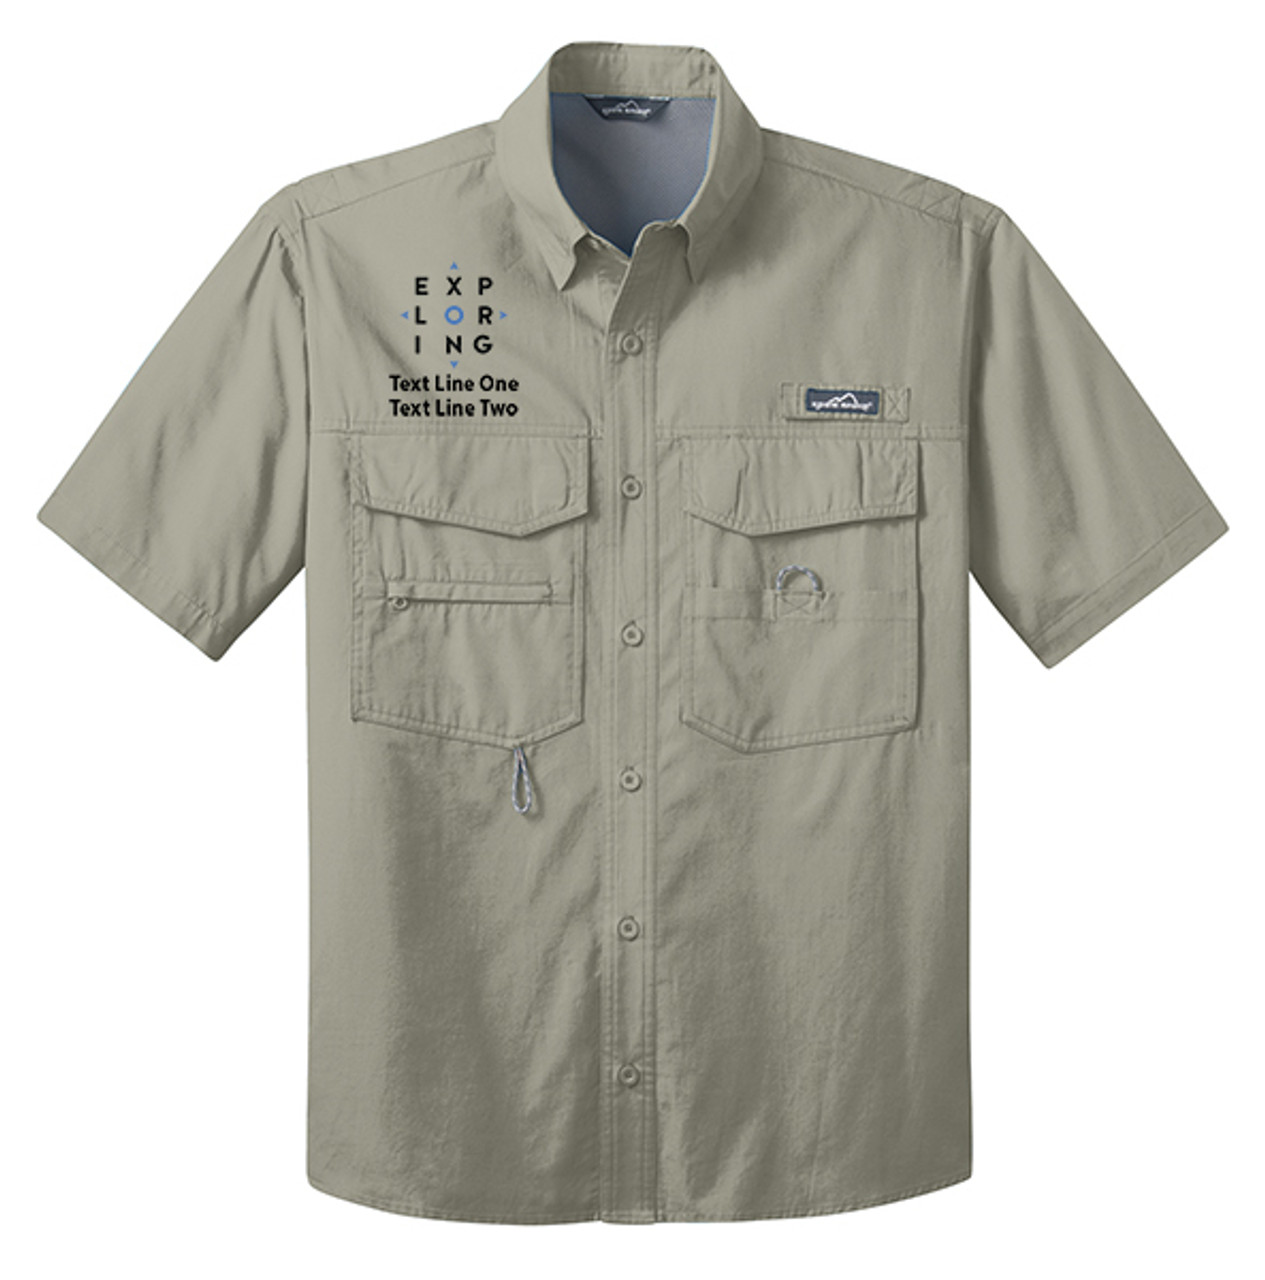 Marsh Wear Spot Brand New Outdoor Summer Men's Fishing Shirt